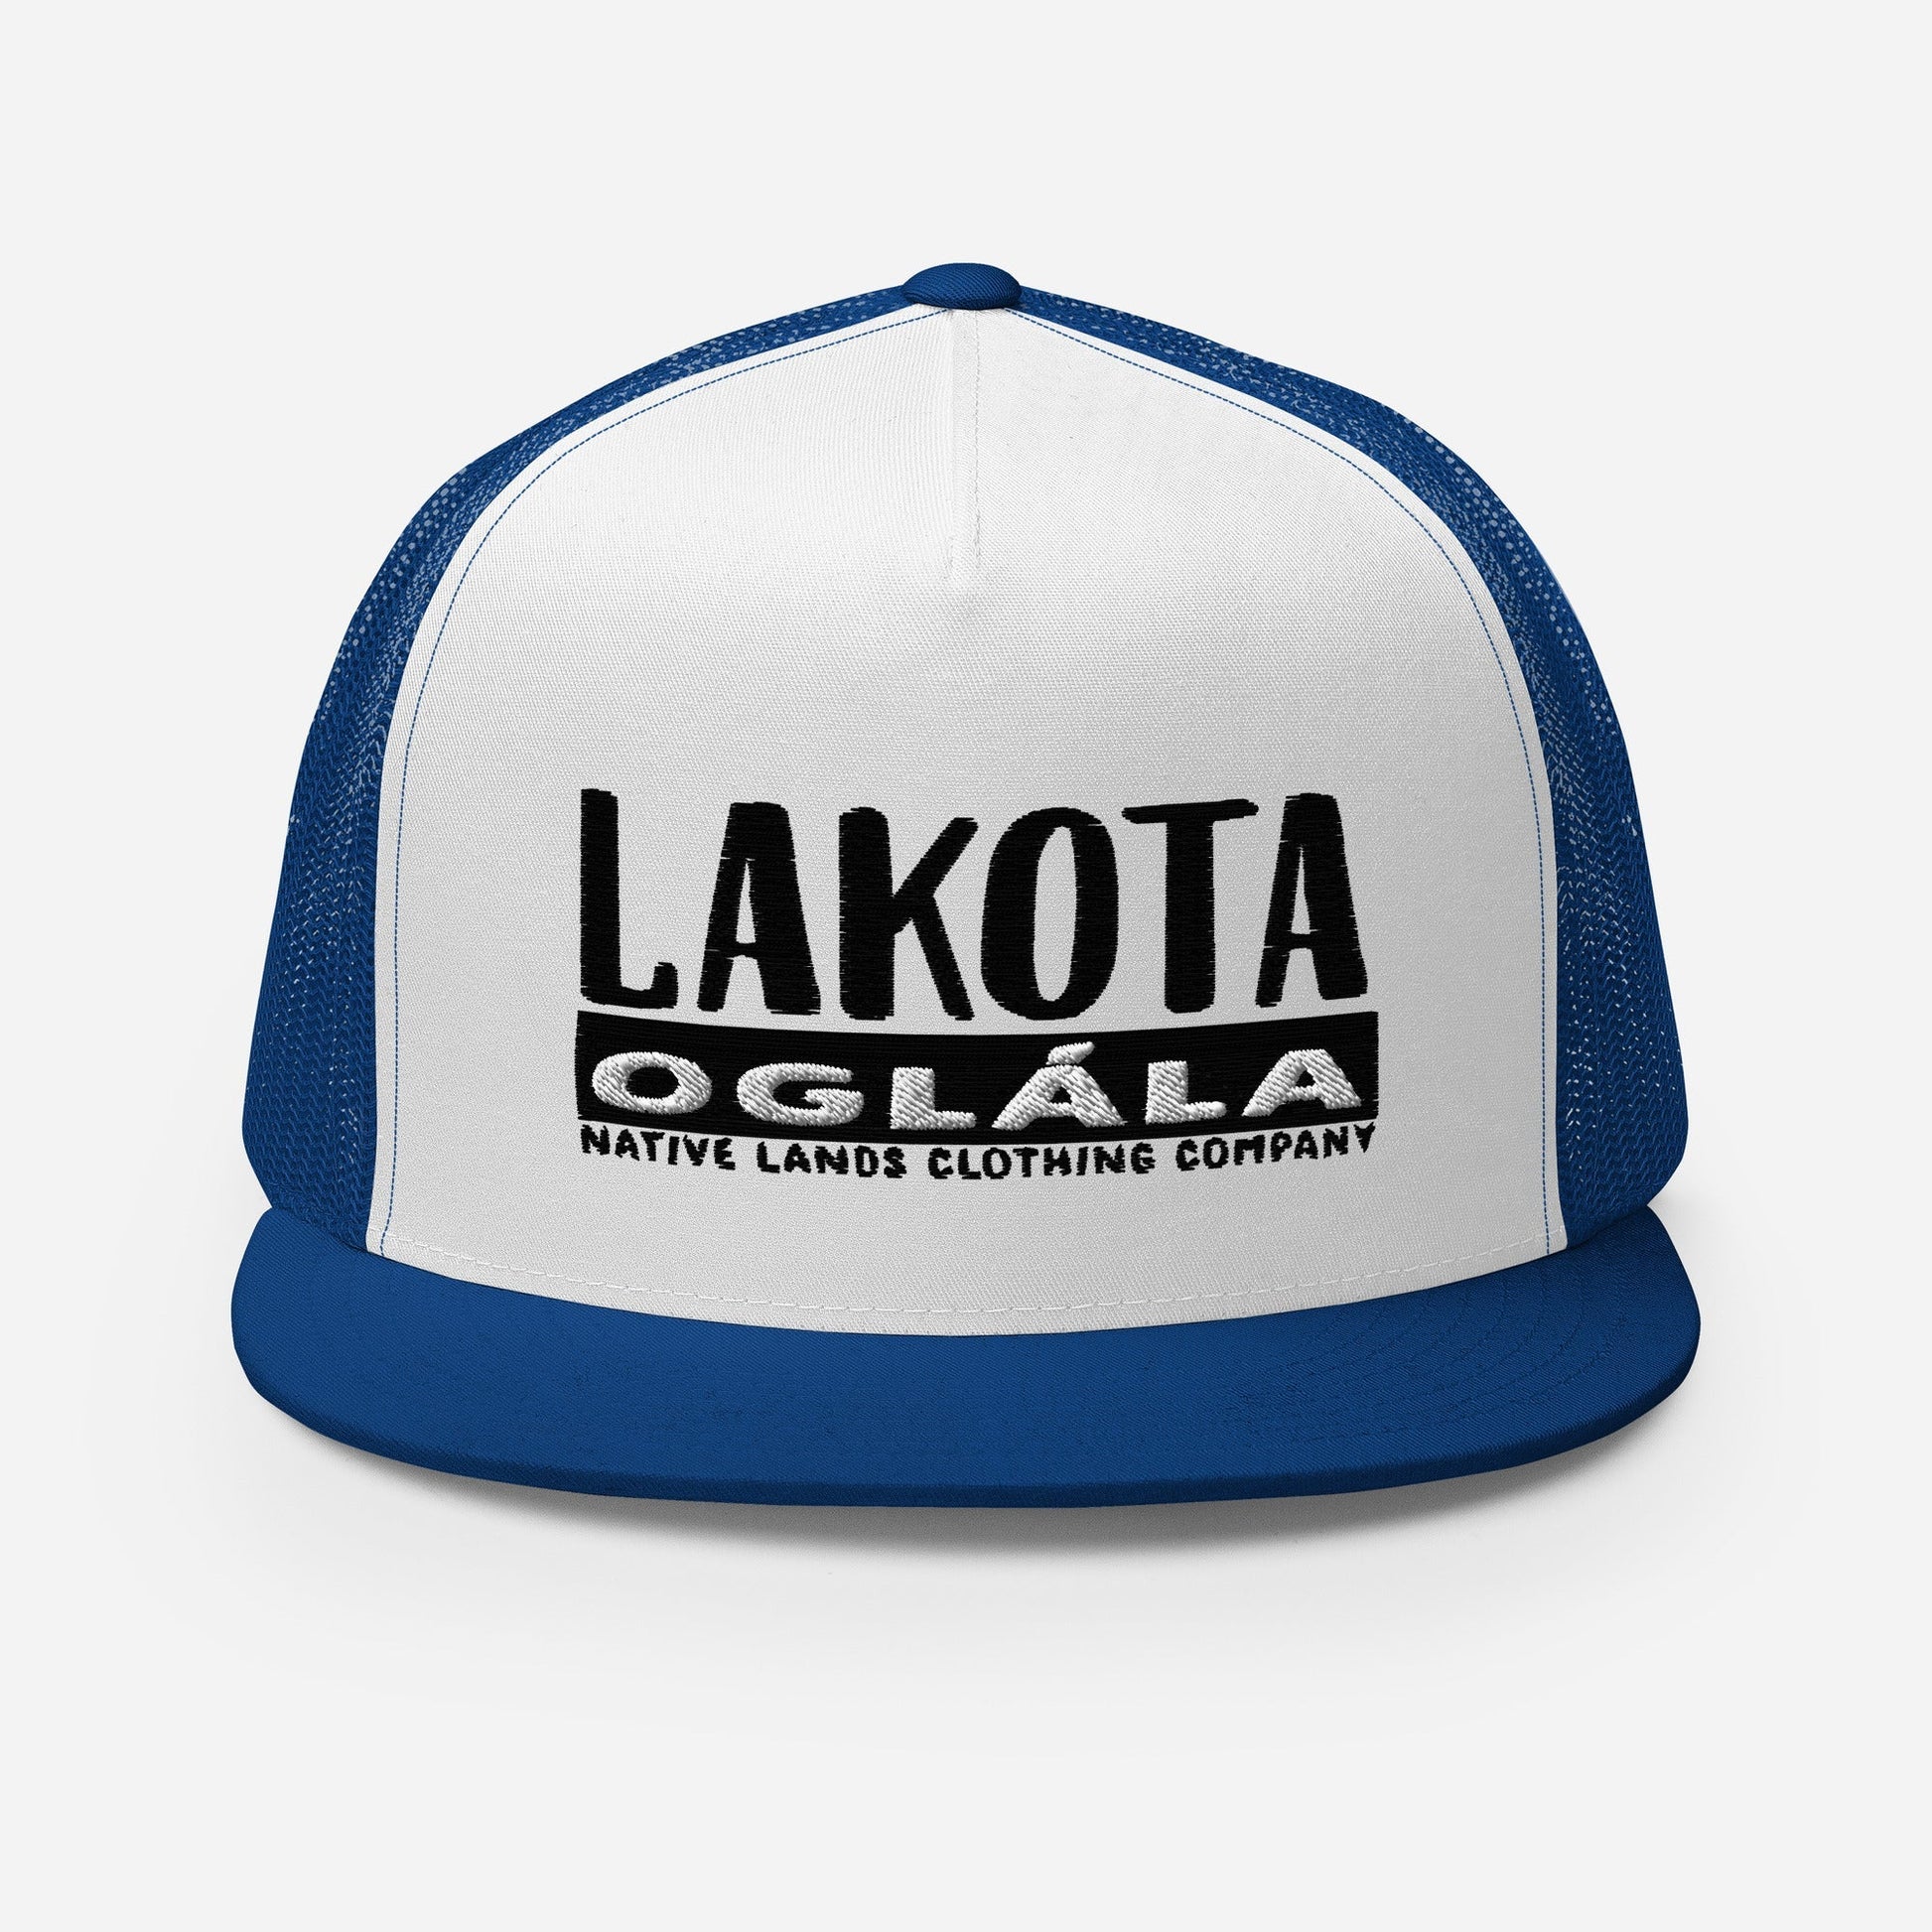 Lakota Oglala Trucker Hat Embroidered Native American Native Lands Clothing Company